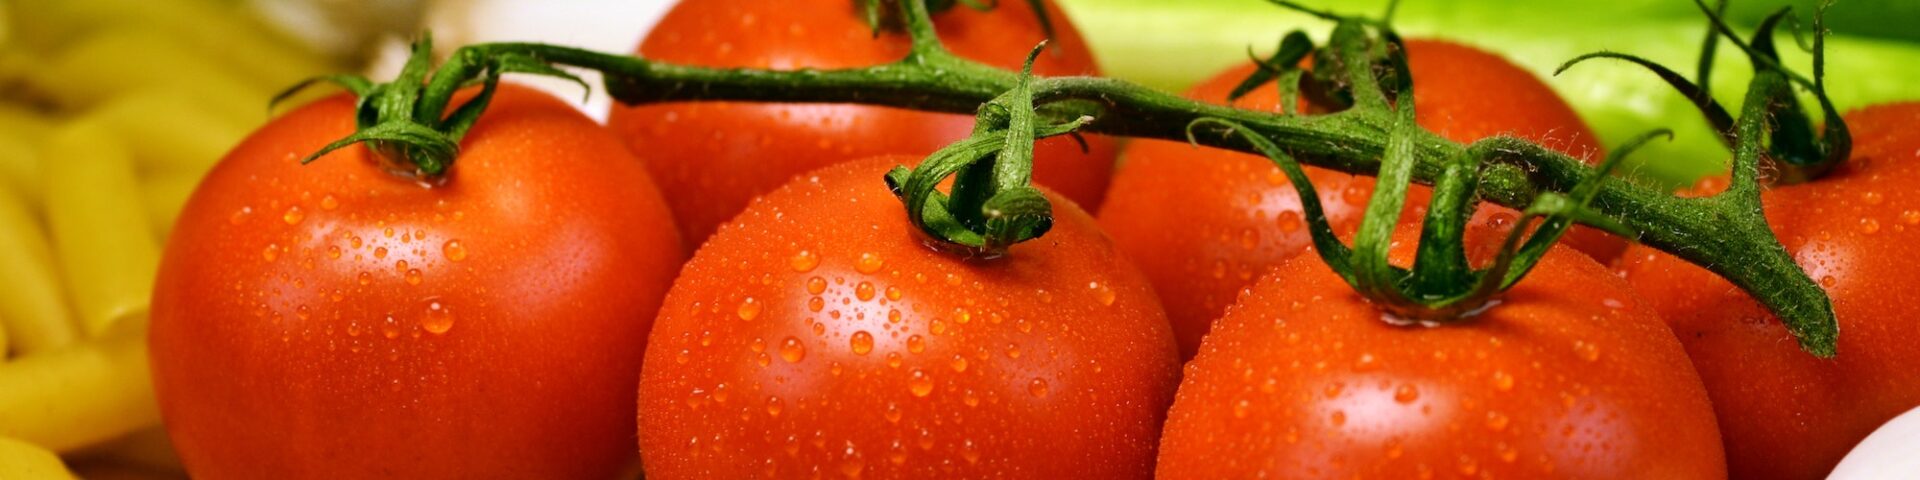 tomatoes and health benefits